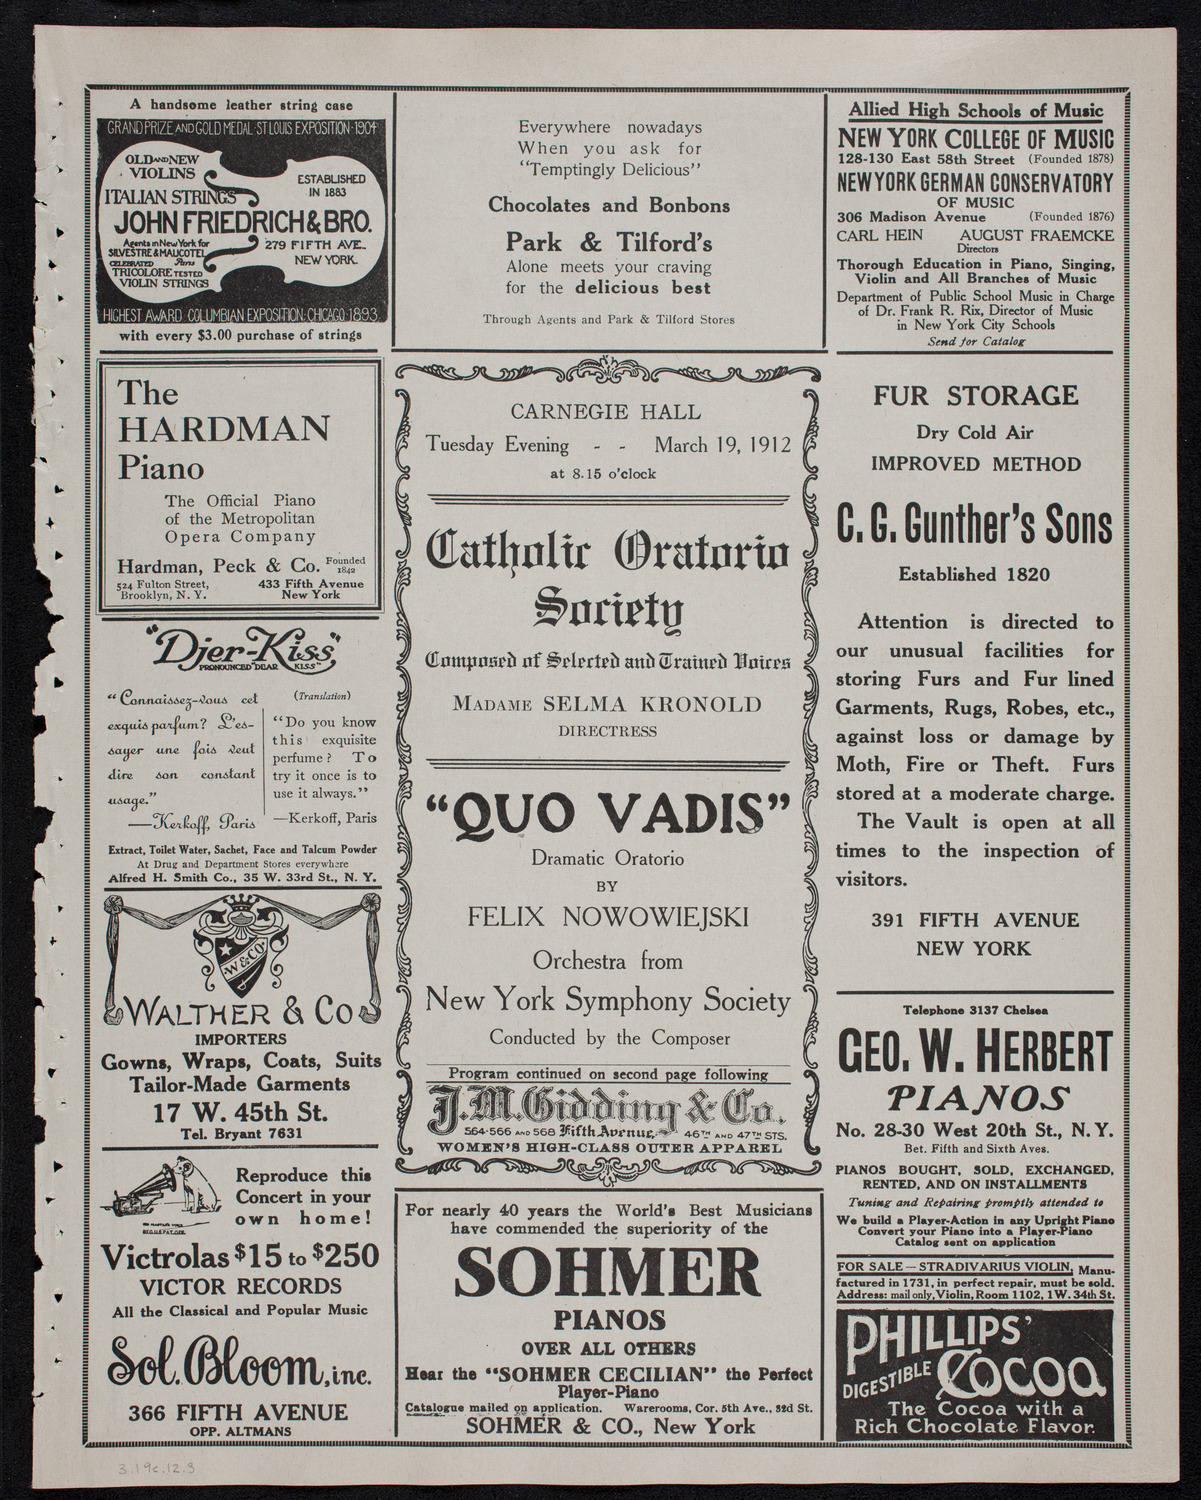 Catholic Oratorio Society, March 19, 1912, program page 5